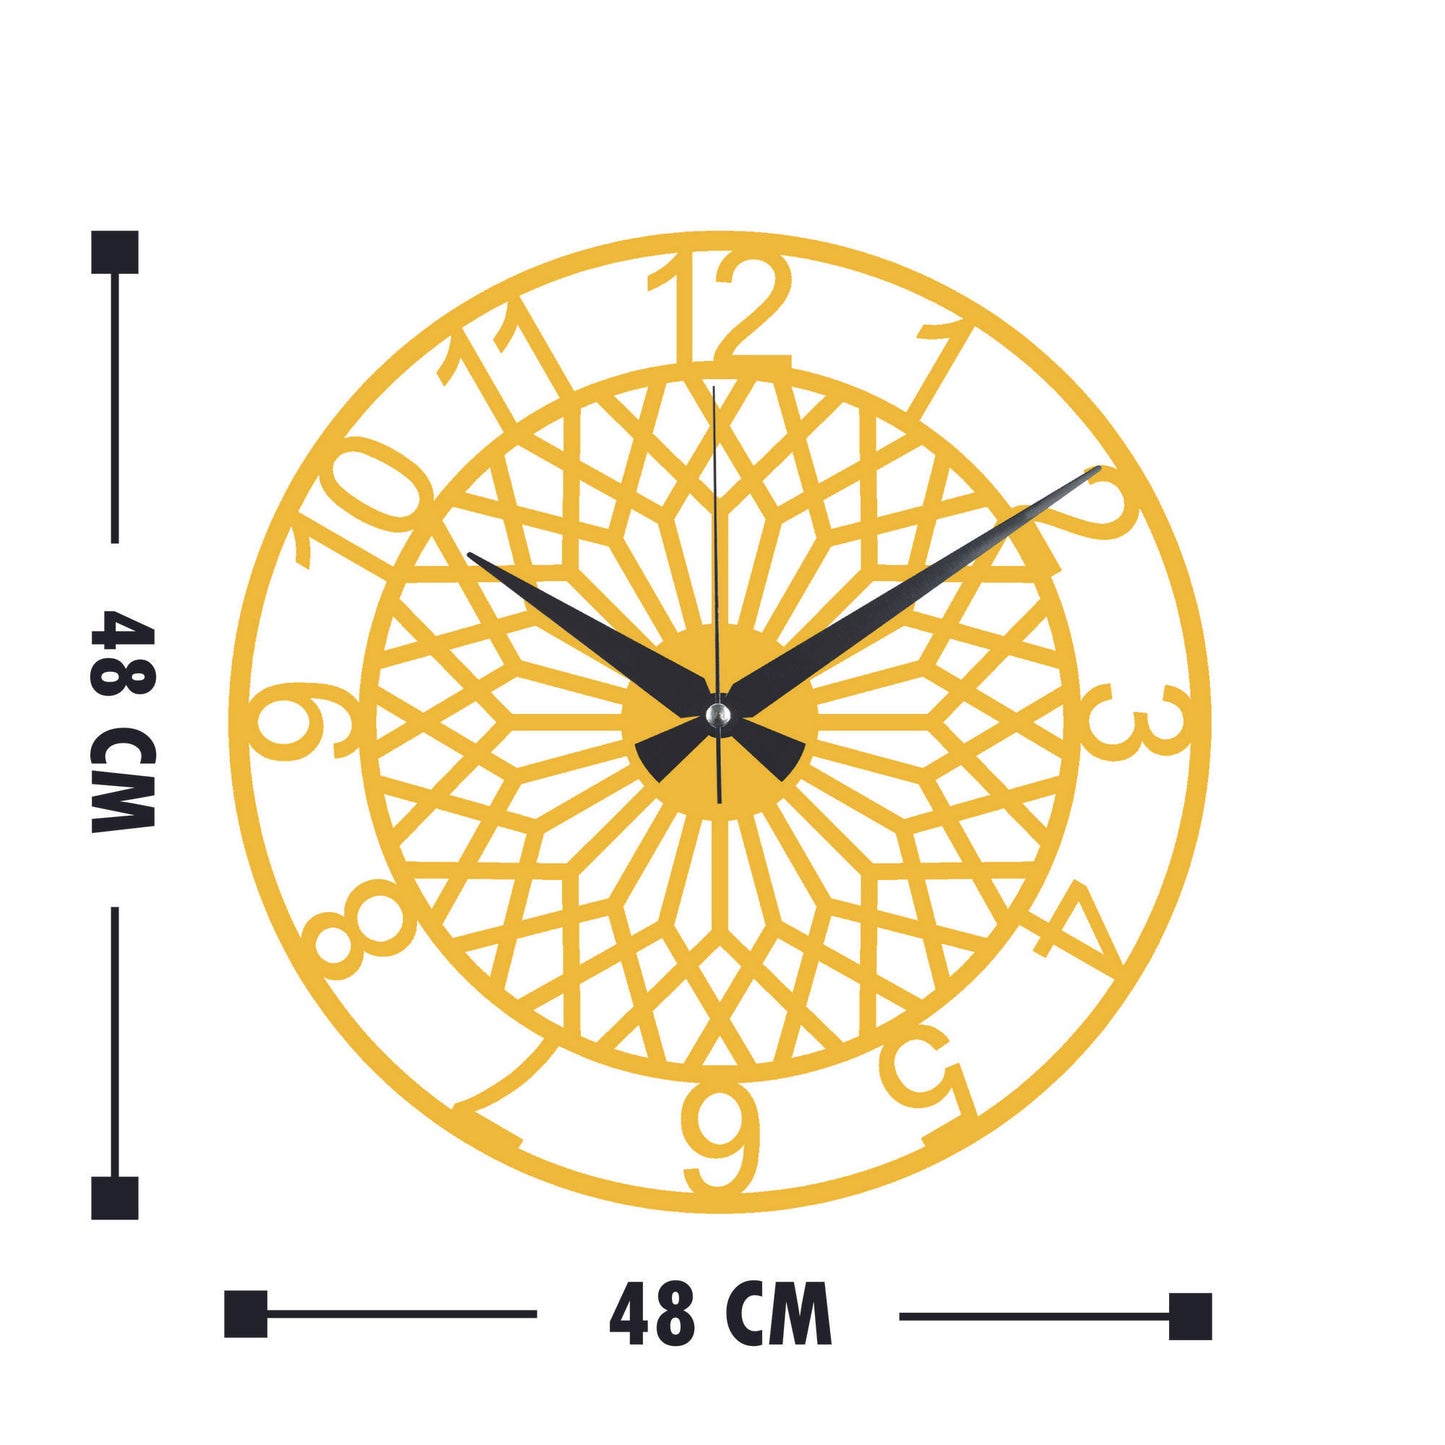 Metal Wall Clock 31 - Gold - Decorative Metal Wall Clock